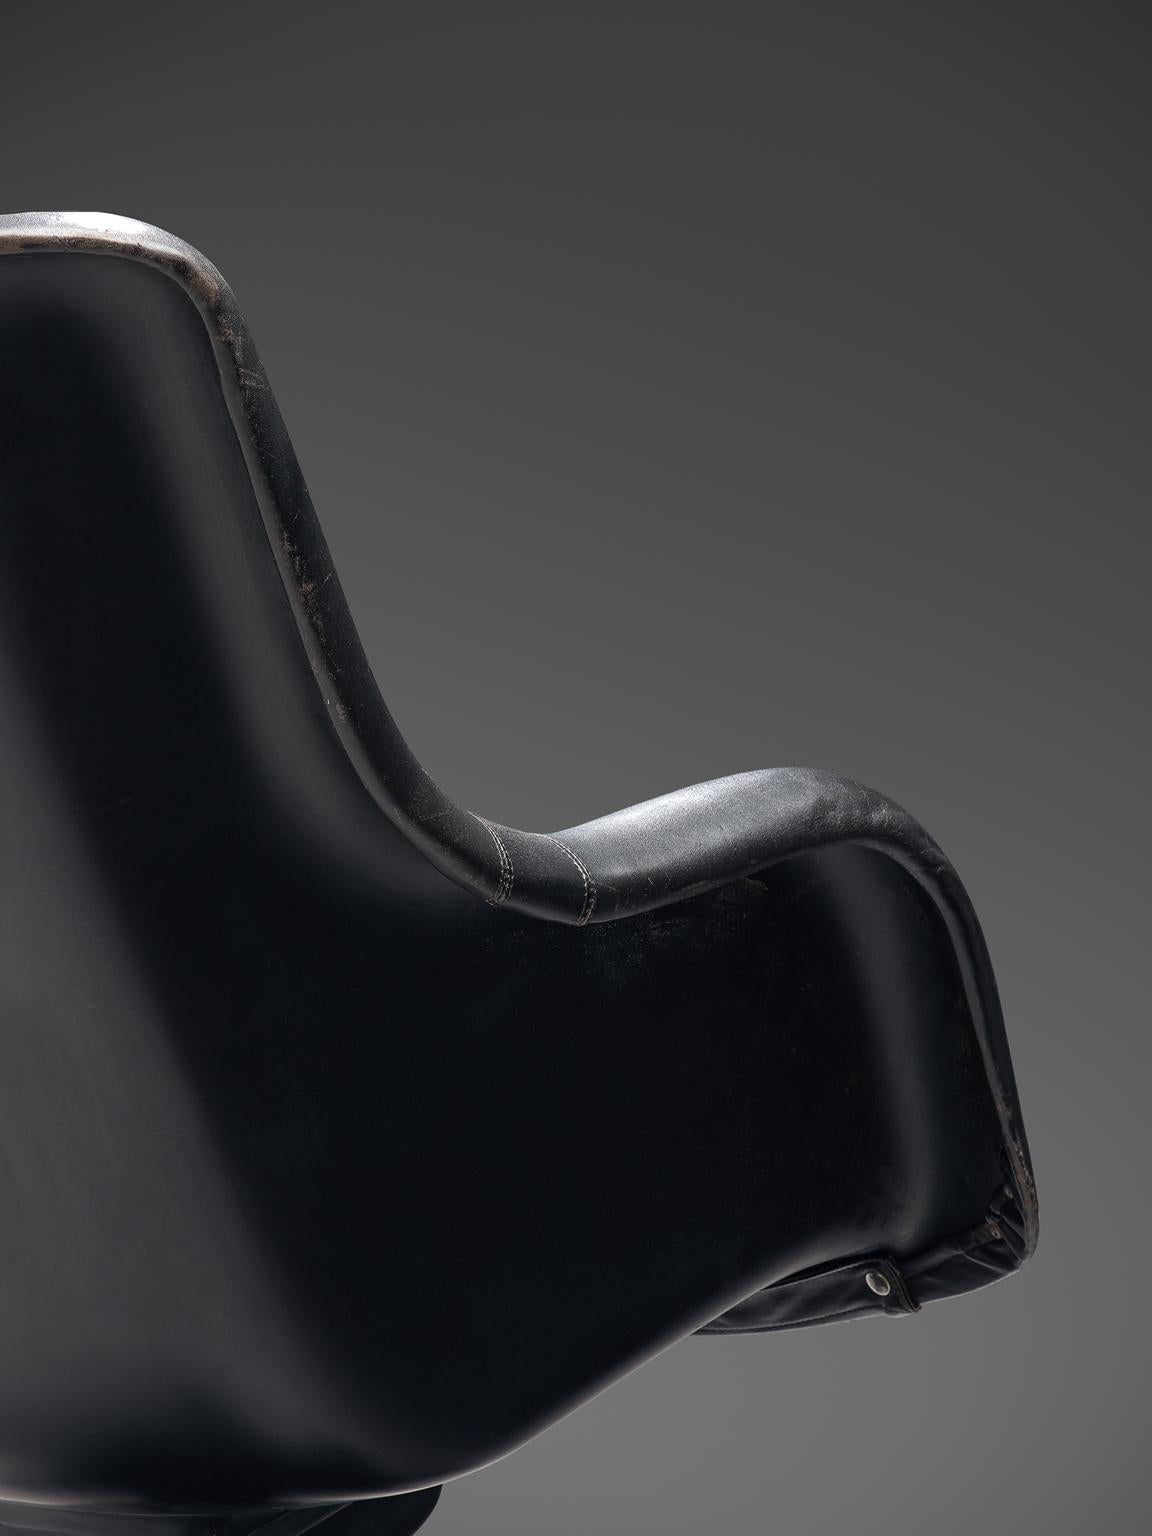 Mid-20th Century Yrjo Kukkapuro 'Karuselli' Lounge Chair in Black Patinated Leather